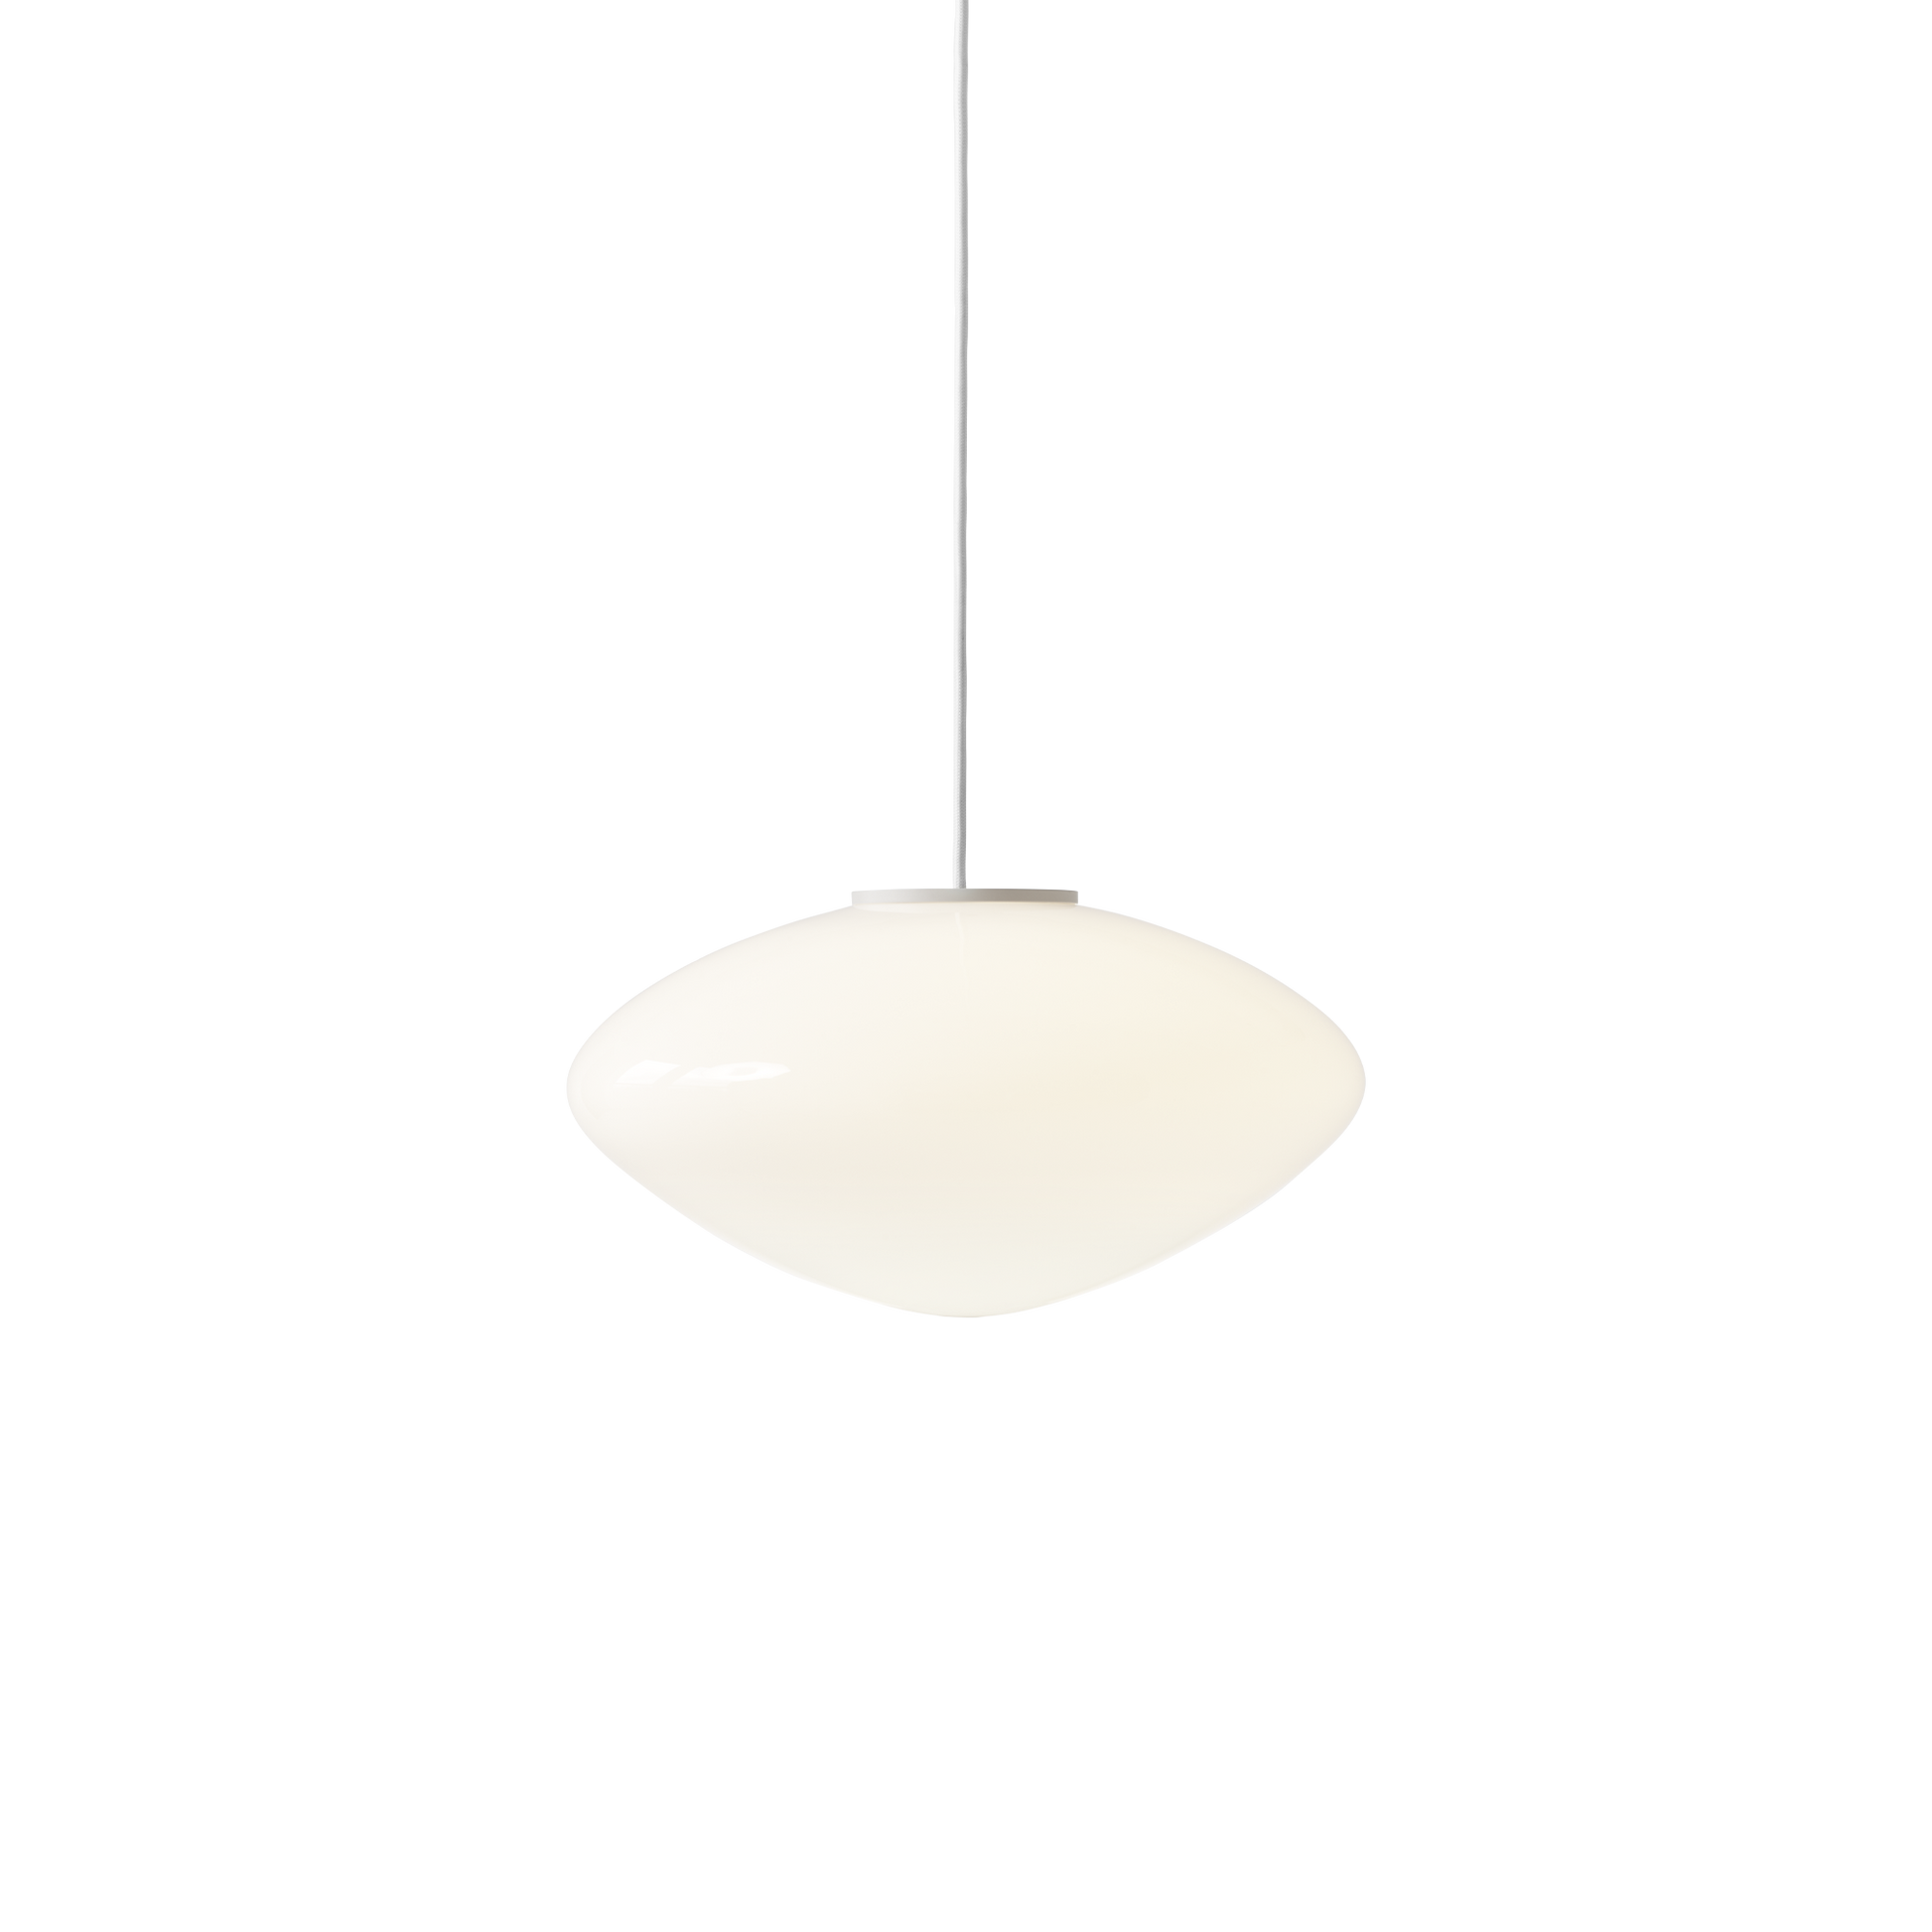 Mist Pendant Lamp AP16 by &tradition #Matt White